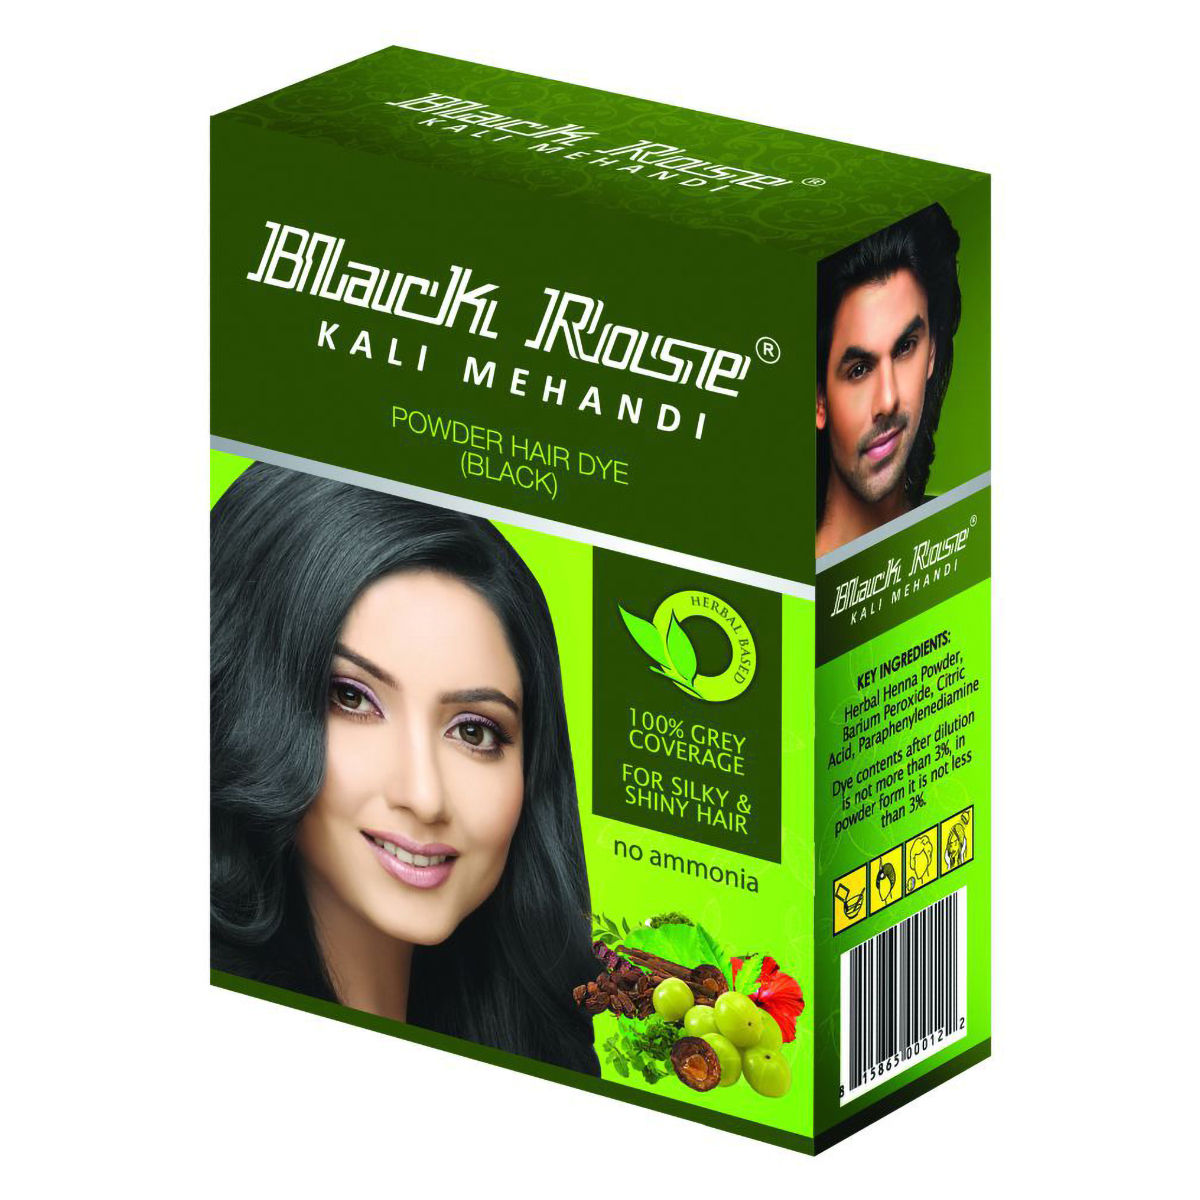 Excel herbal kali mehandi Powder Hair Dye in Bangalore at best price by  Green link organics - Justdial